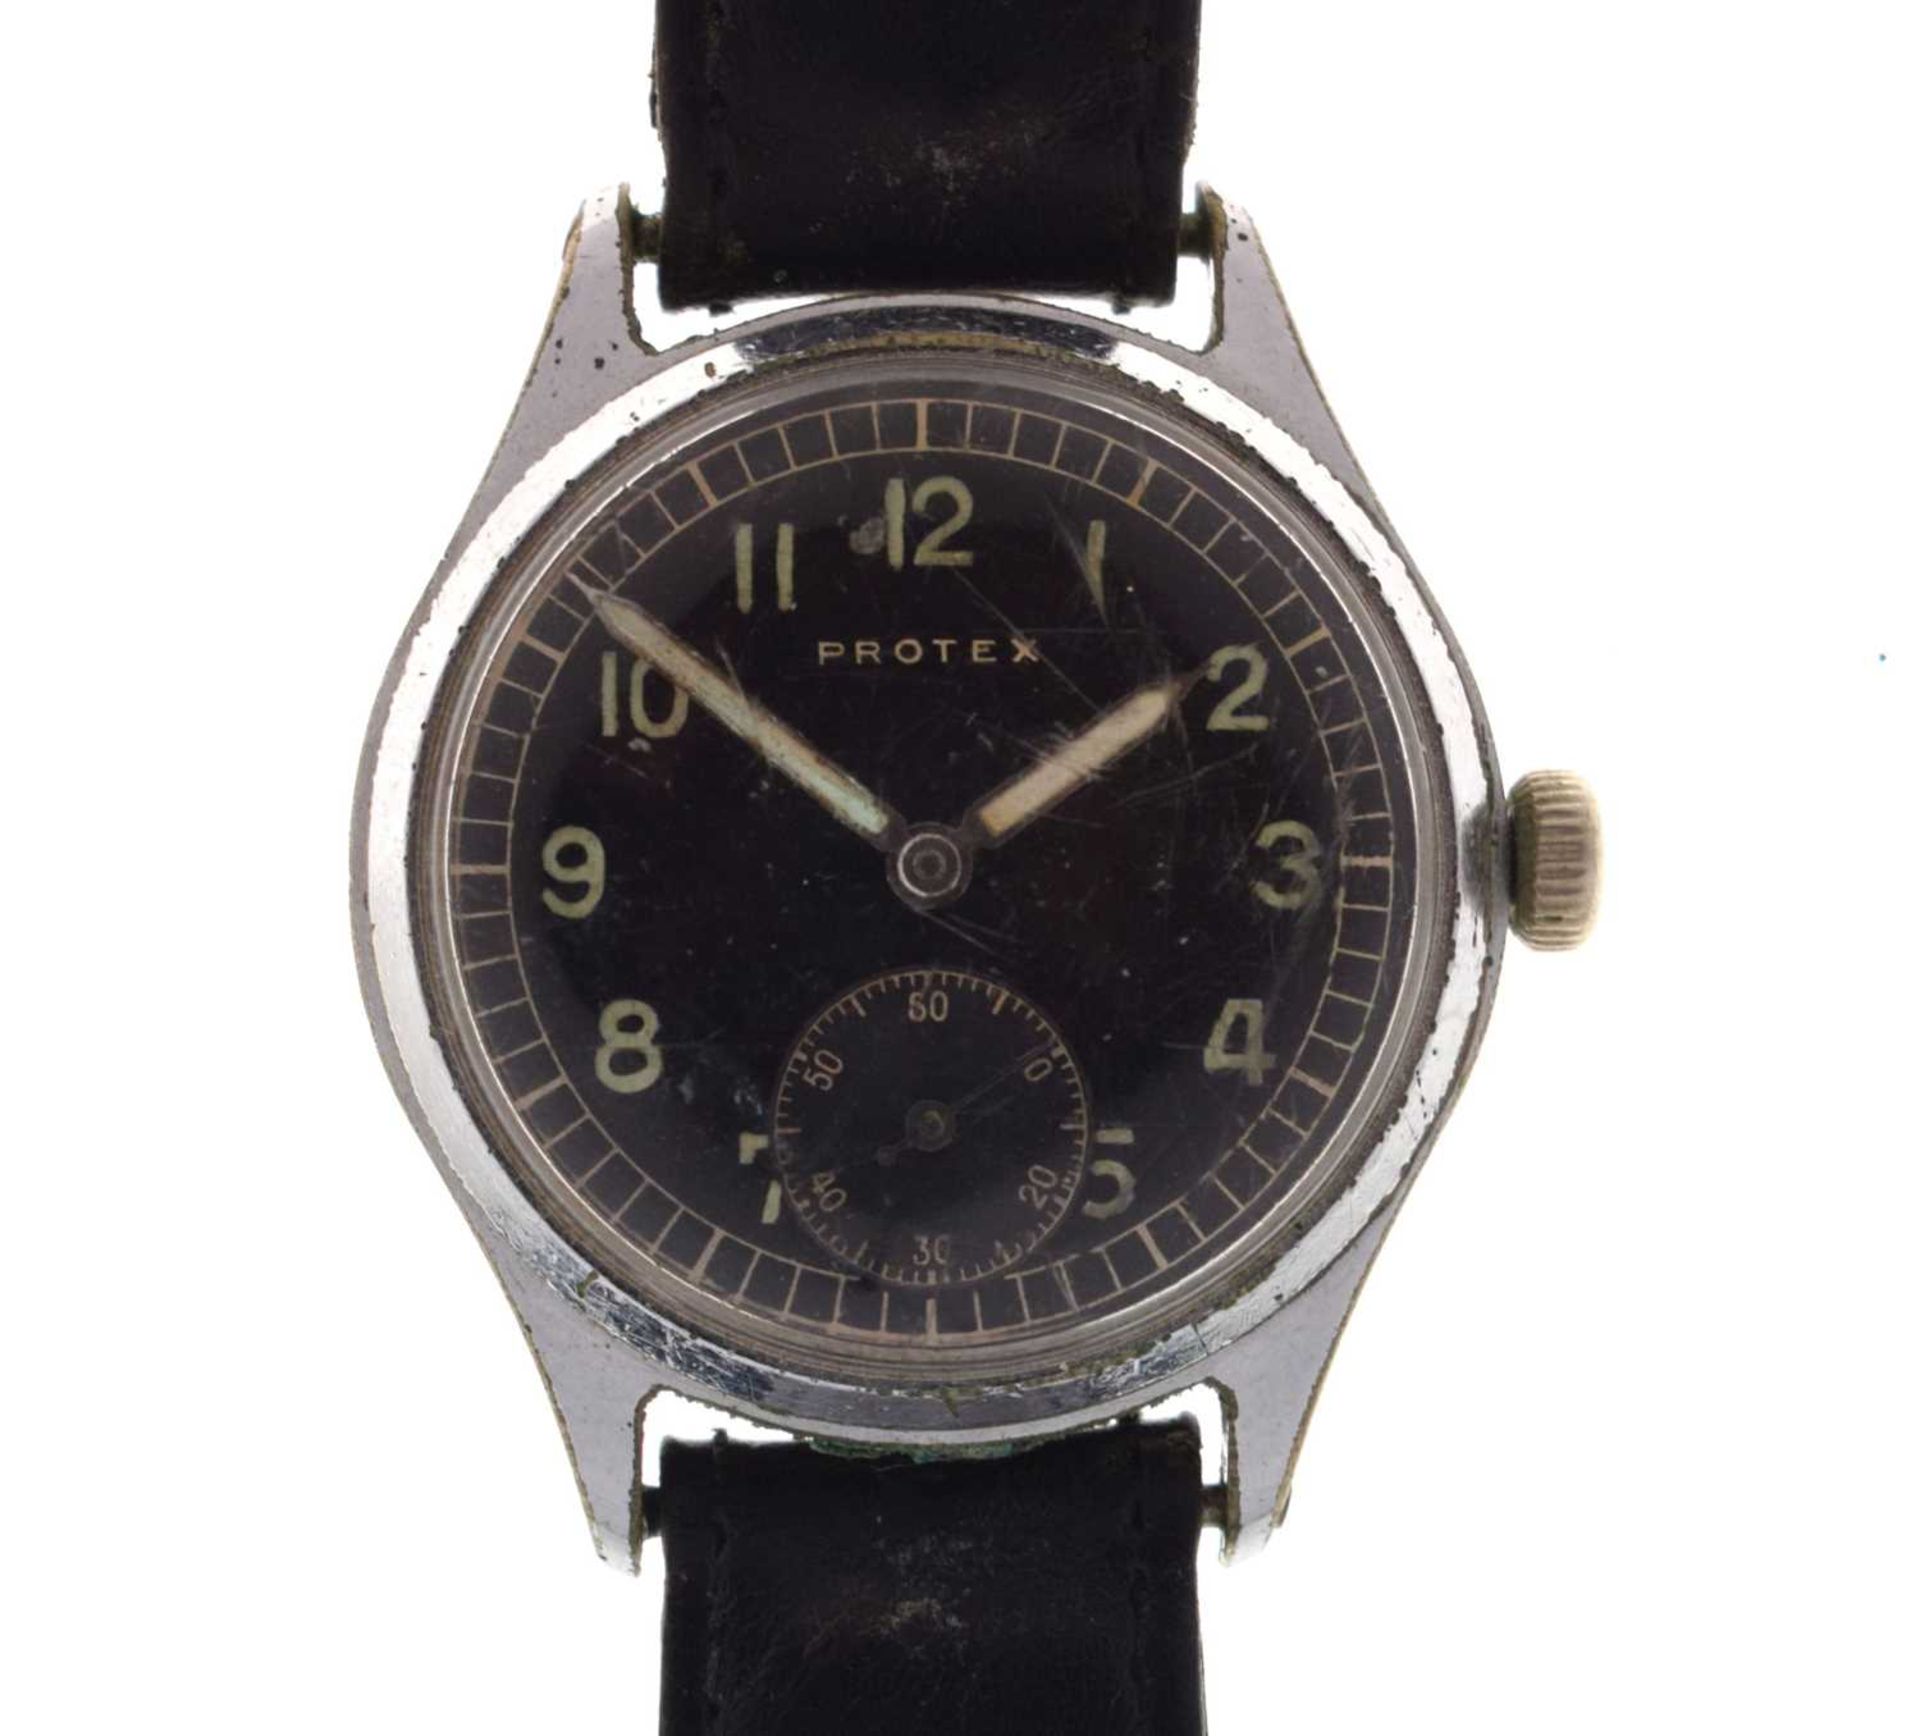 Protex - Second World War Period German Army stainless steel mechanical wristwatch, ref. 497